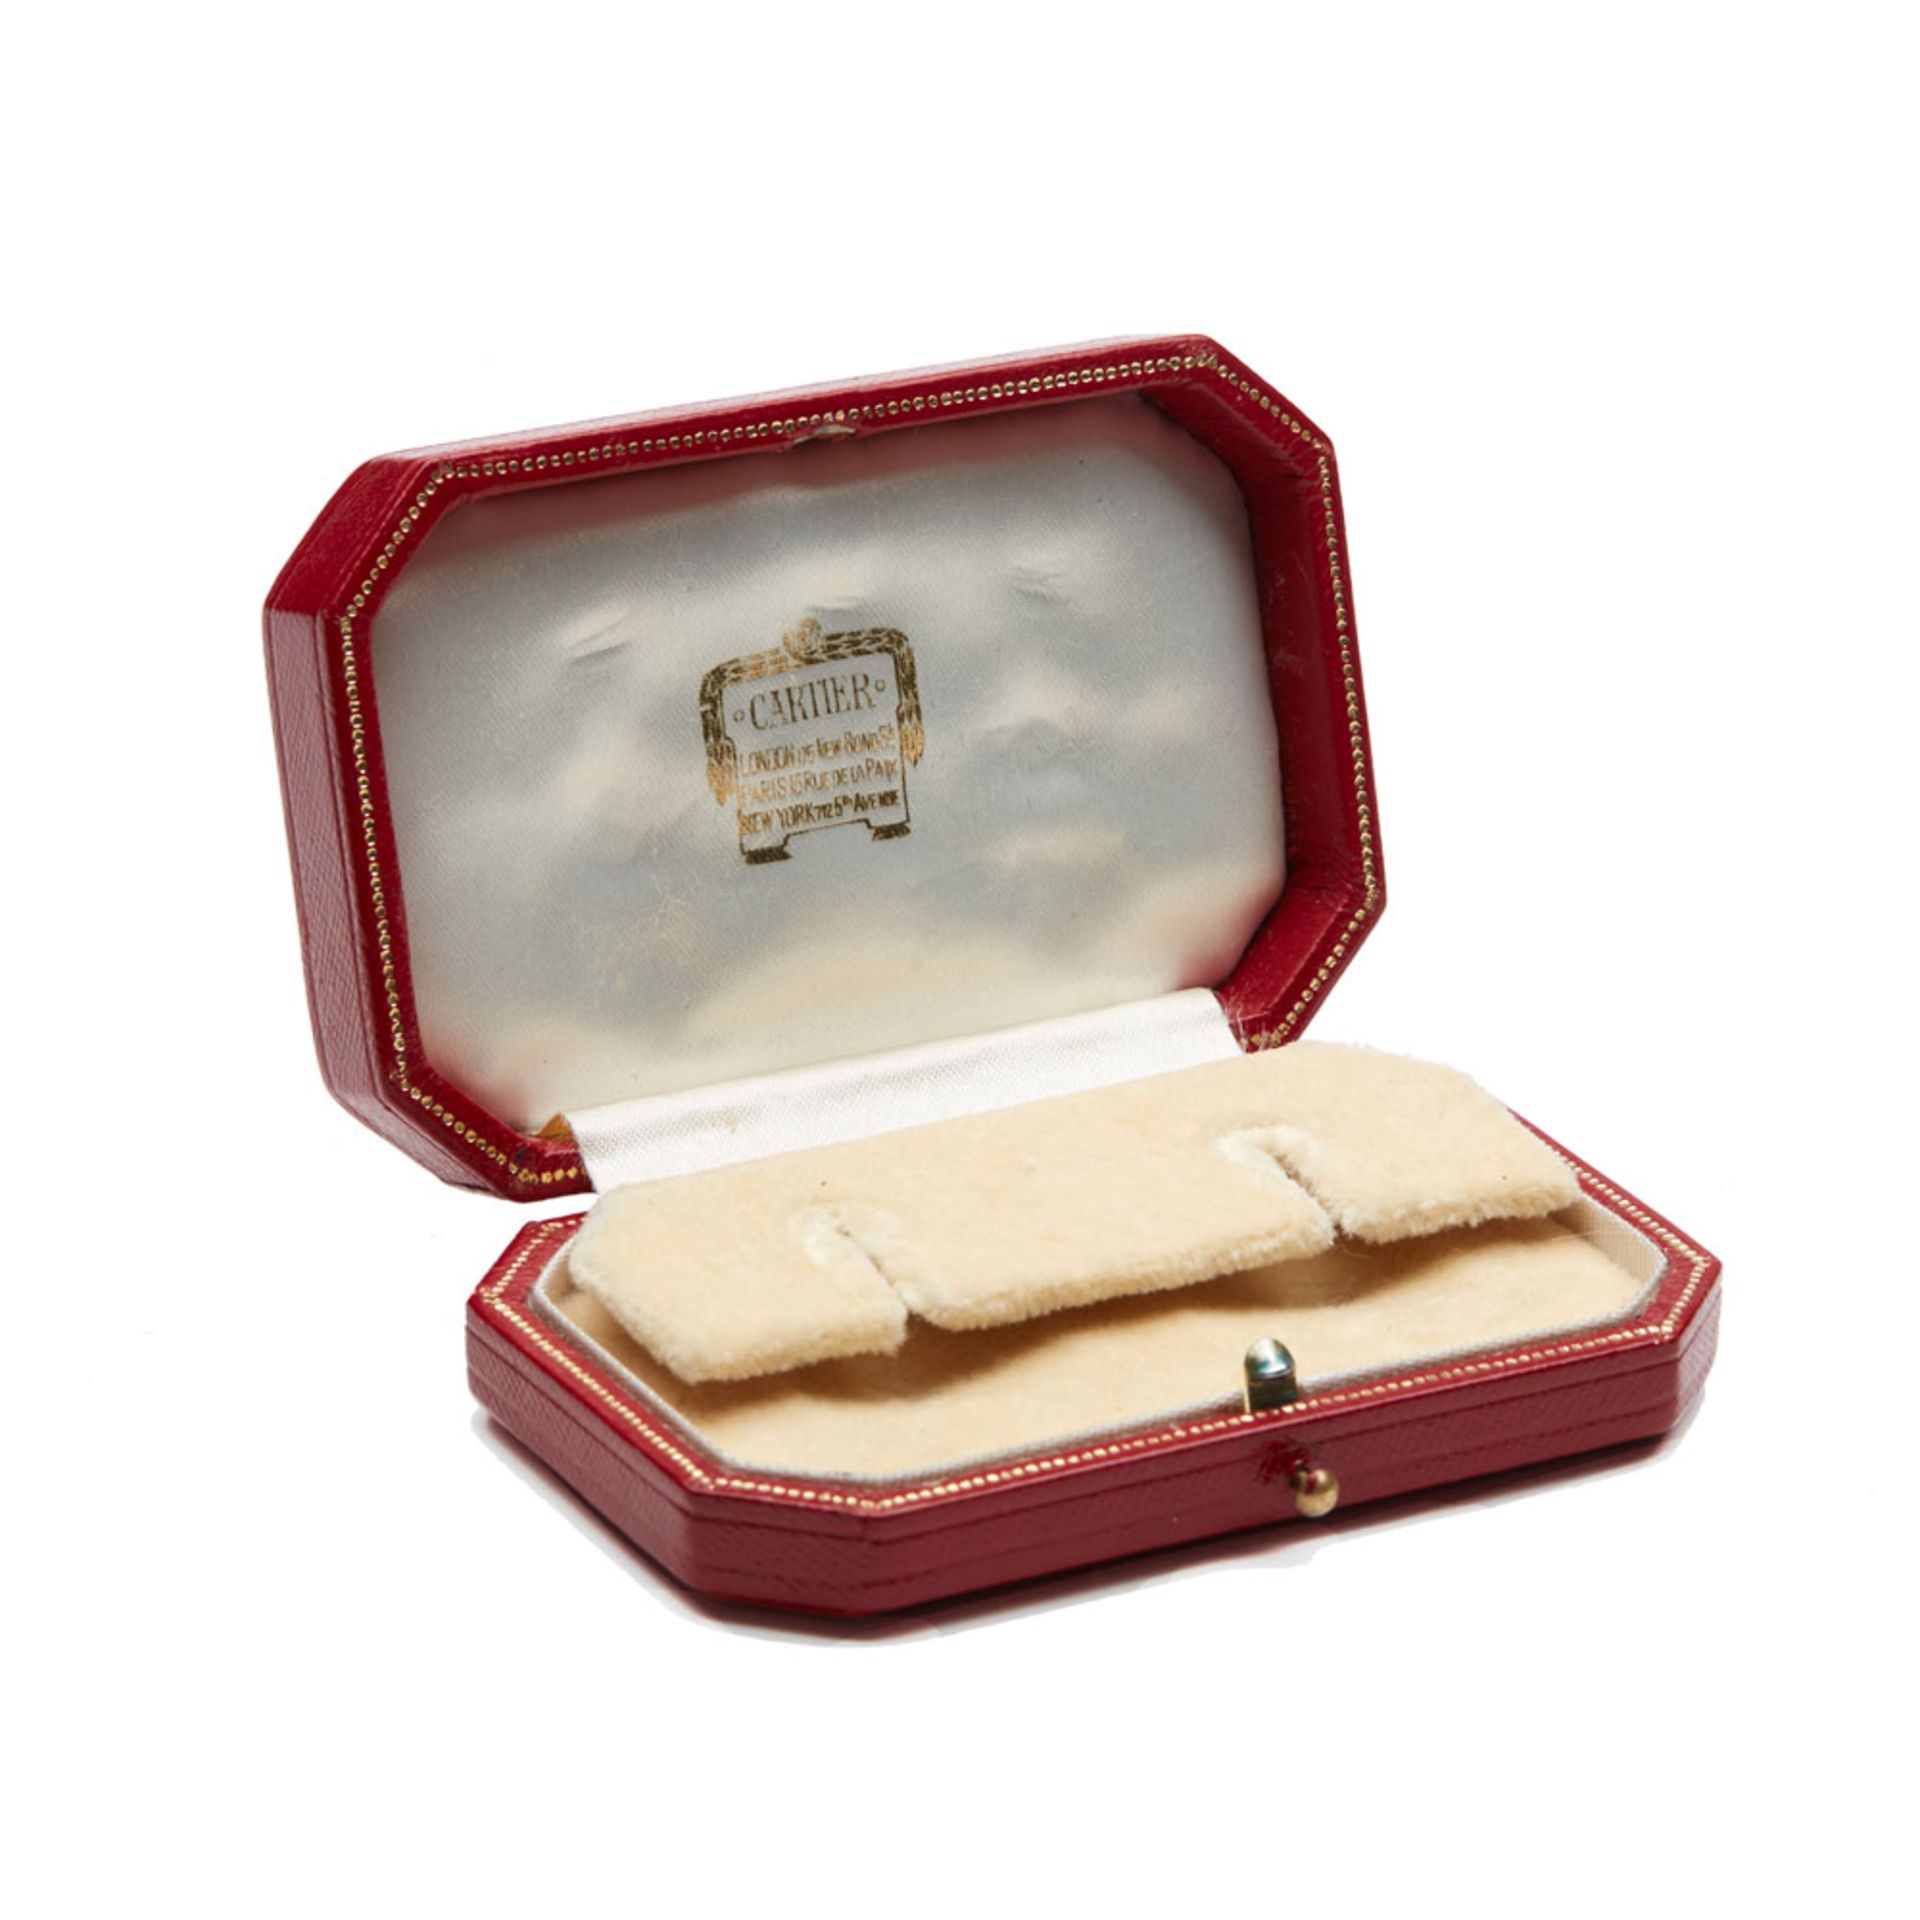 Cartier 18k White Gold 3.07ct Pink Tourmaline & 5.10ct Diamond Earrings - Image 8 of 8